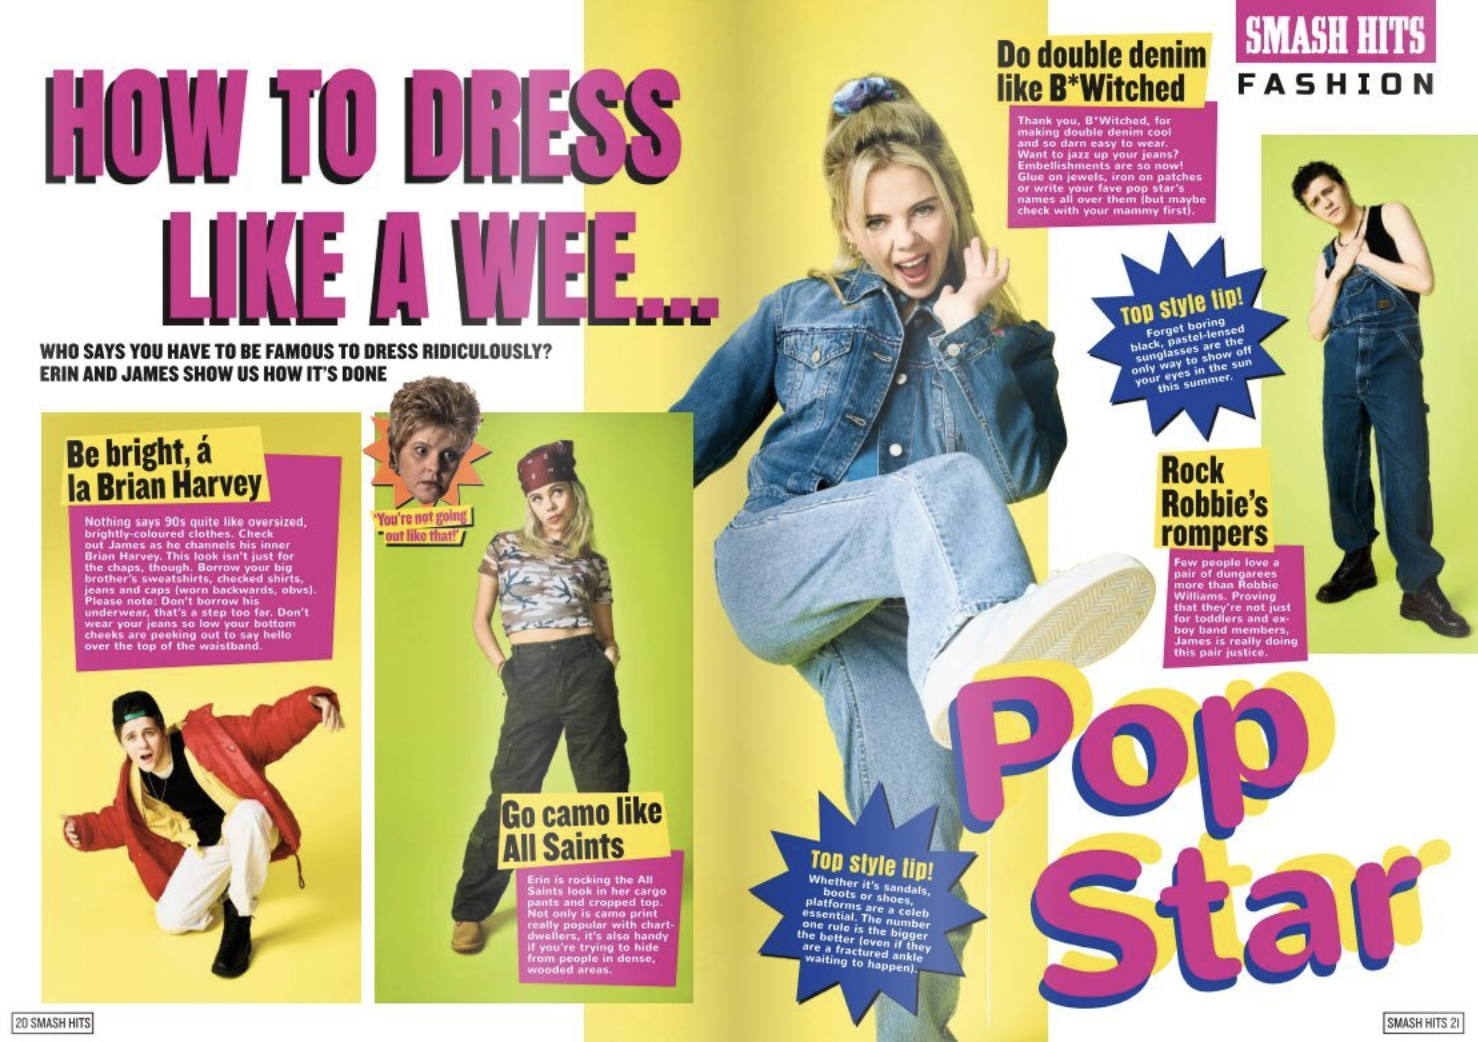 How to dress like a wee pop star